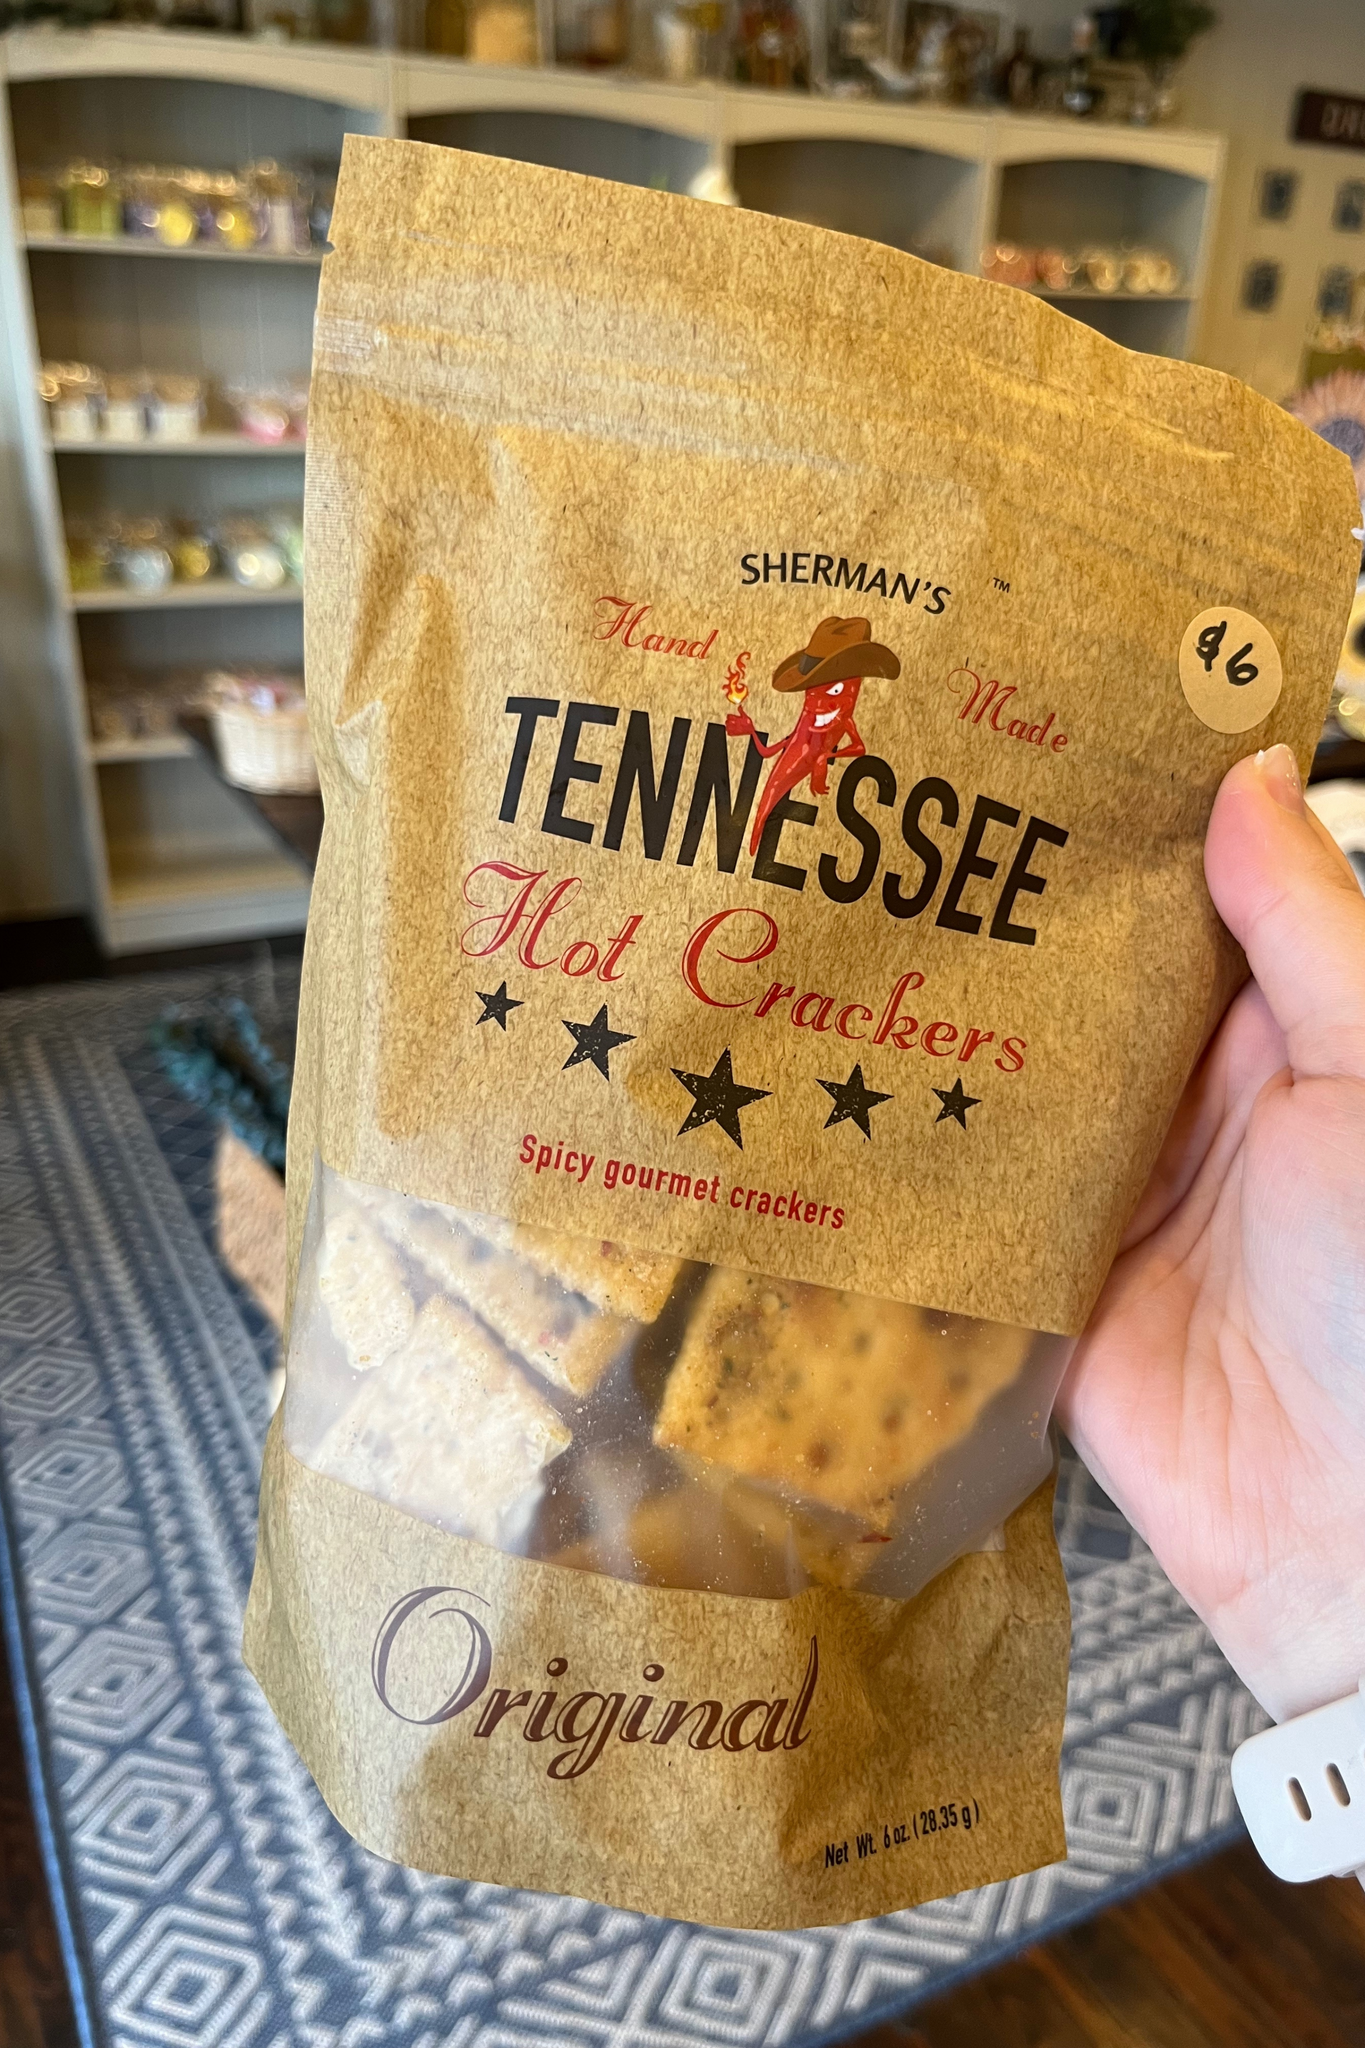 Sherman's Original Flavor Tennessee Hot Crackers